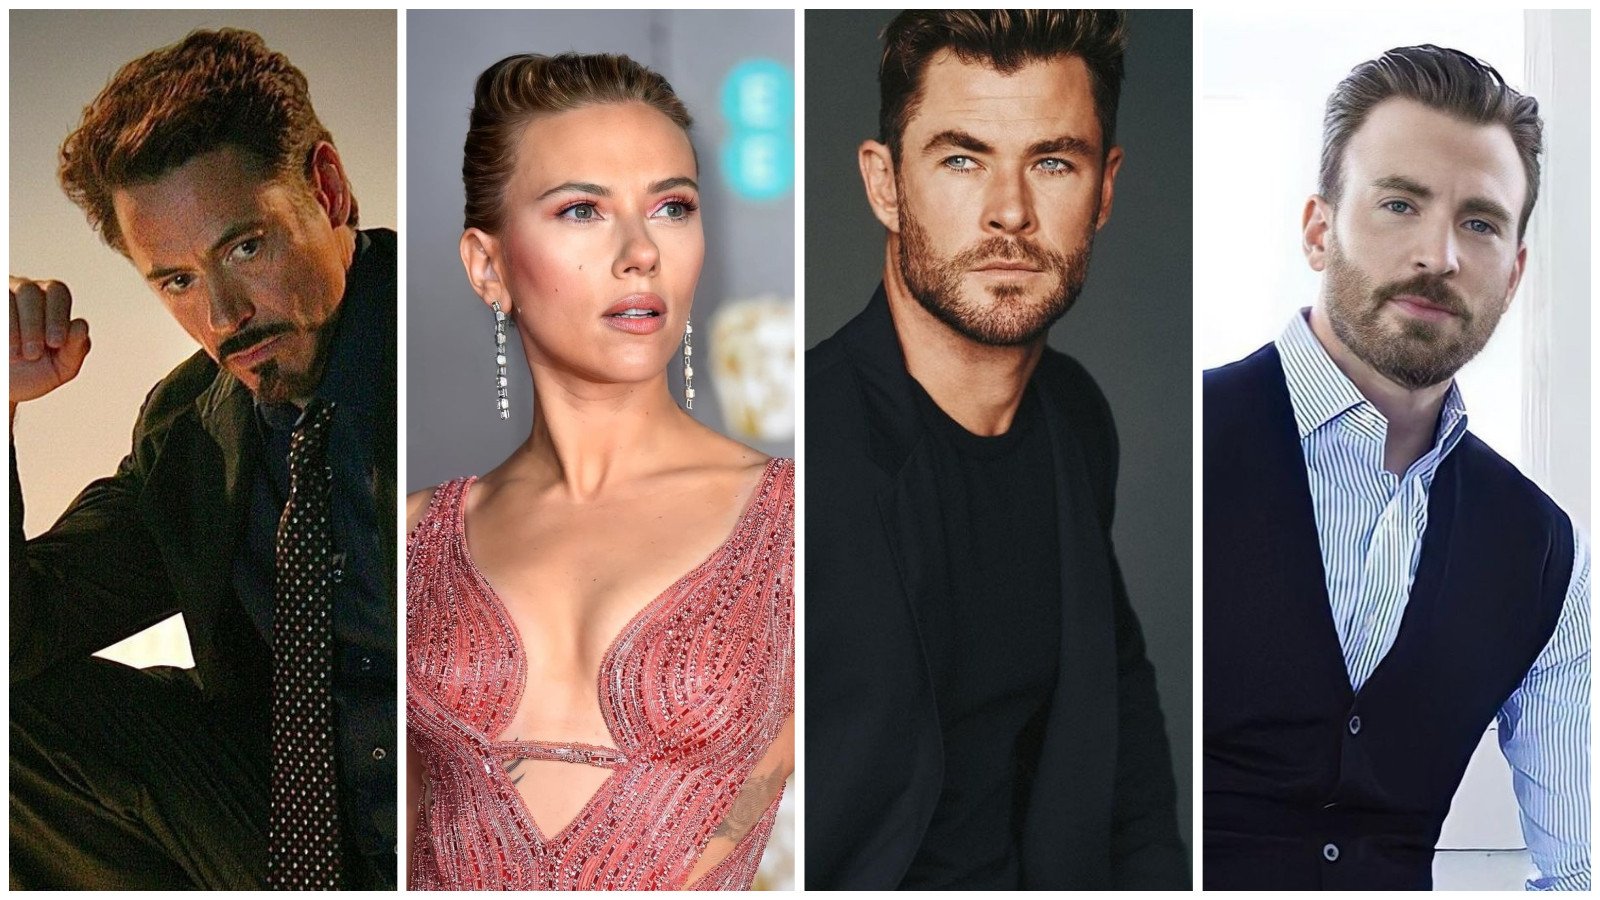 Robert Downey Jr., Scarlett Johansson, Chris Hemsworth and Chris Evans are four of the wealthiest actors in the MCU. Photos: @robertdowneyjr, @scarlettjohanssonworld, @chrishemsworth, @teamcevans/Instagram